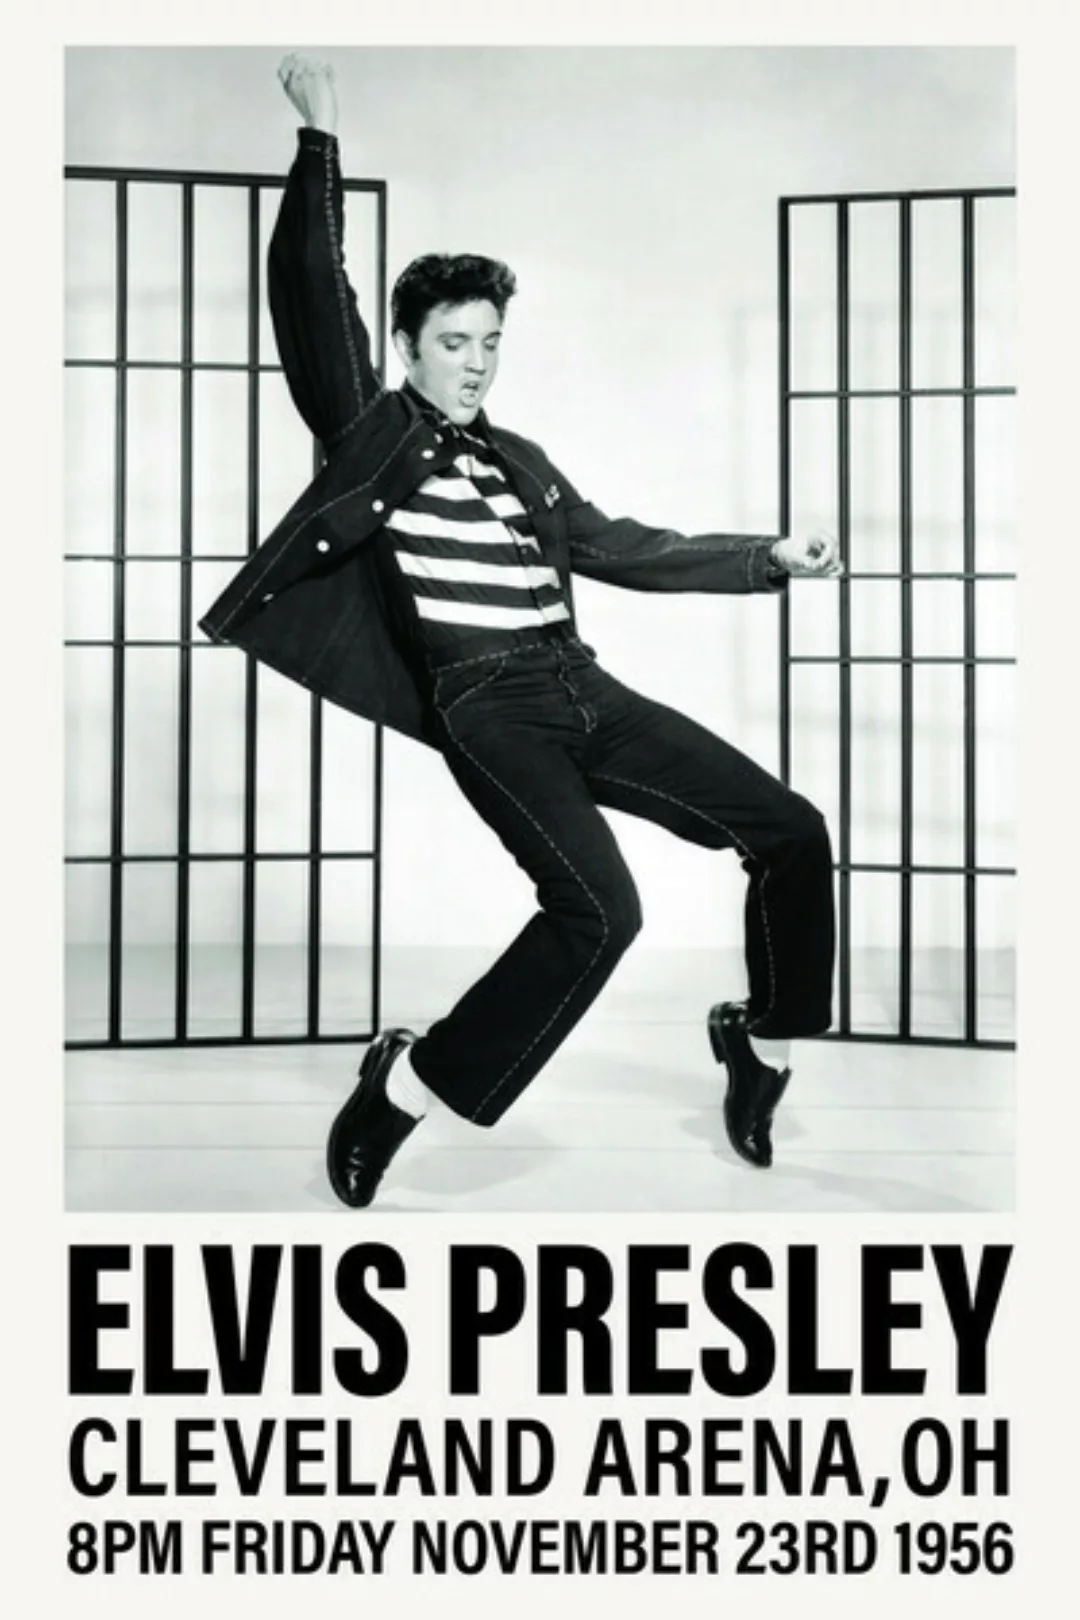 Poster / Leinwandbild - Elvis Presley günstig online kaufen